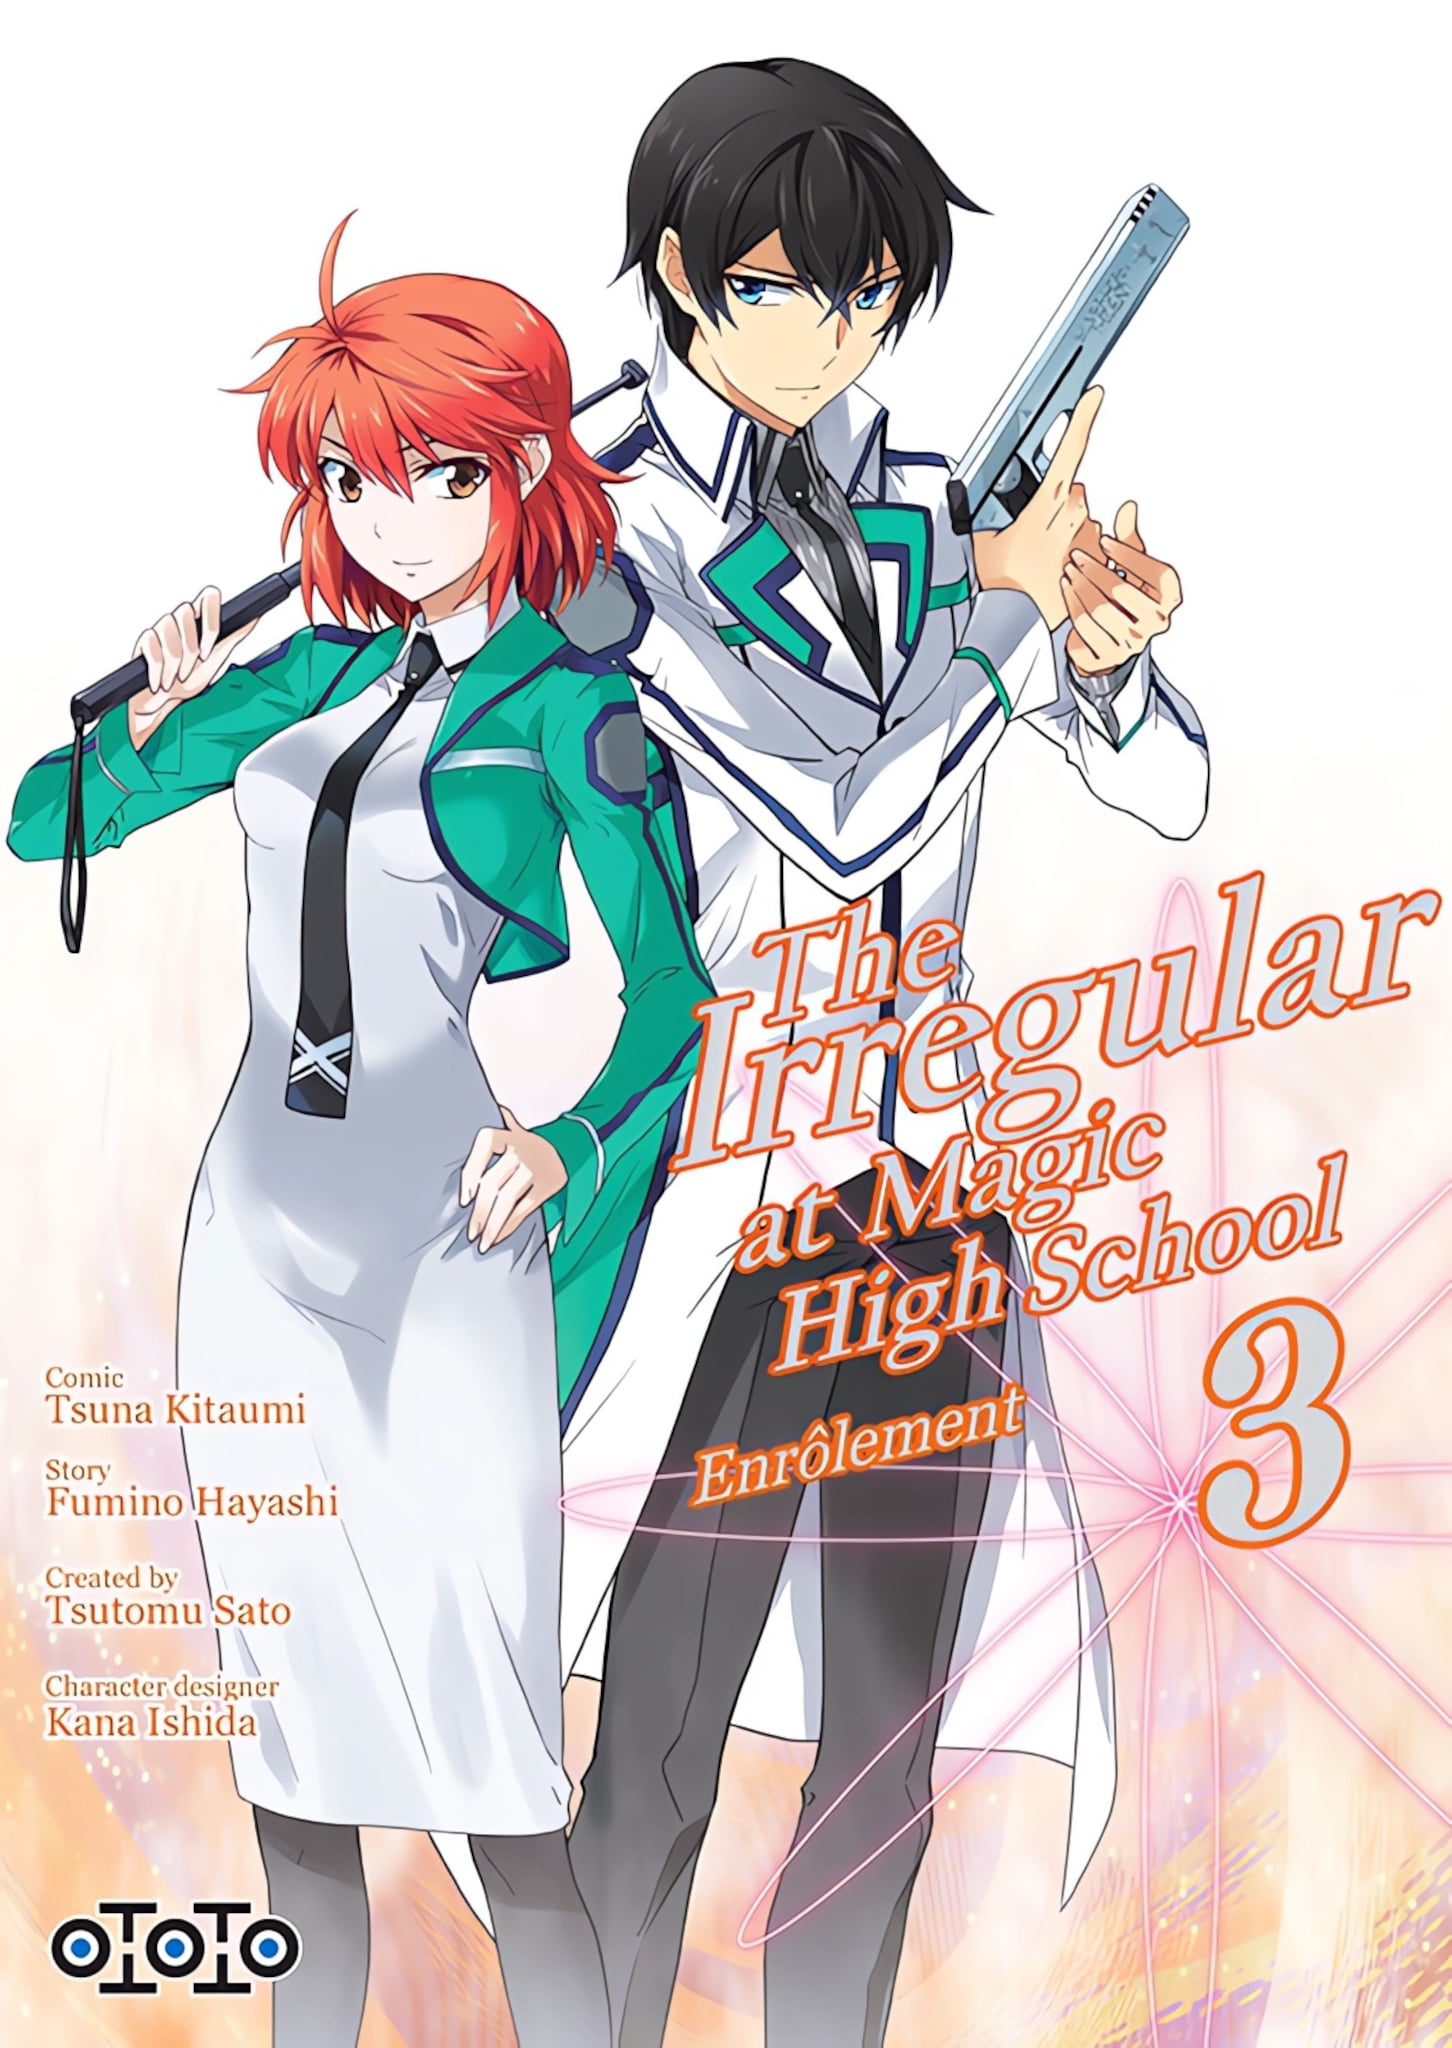 Tome 3 du manga The Irregular at Magic High School, arc Enrôlement